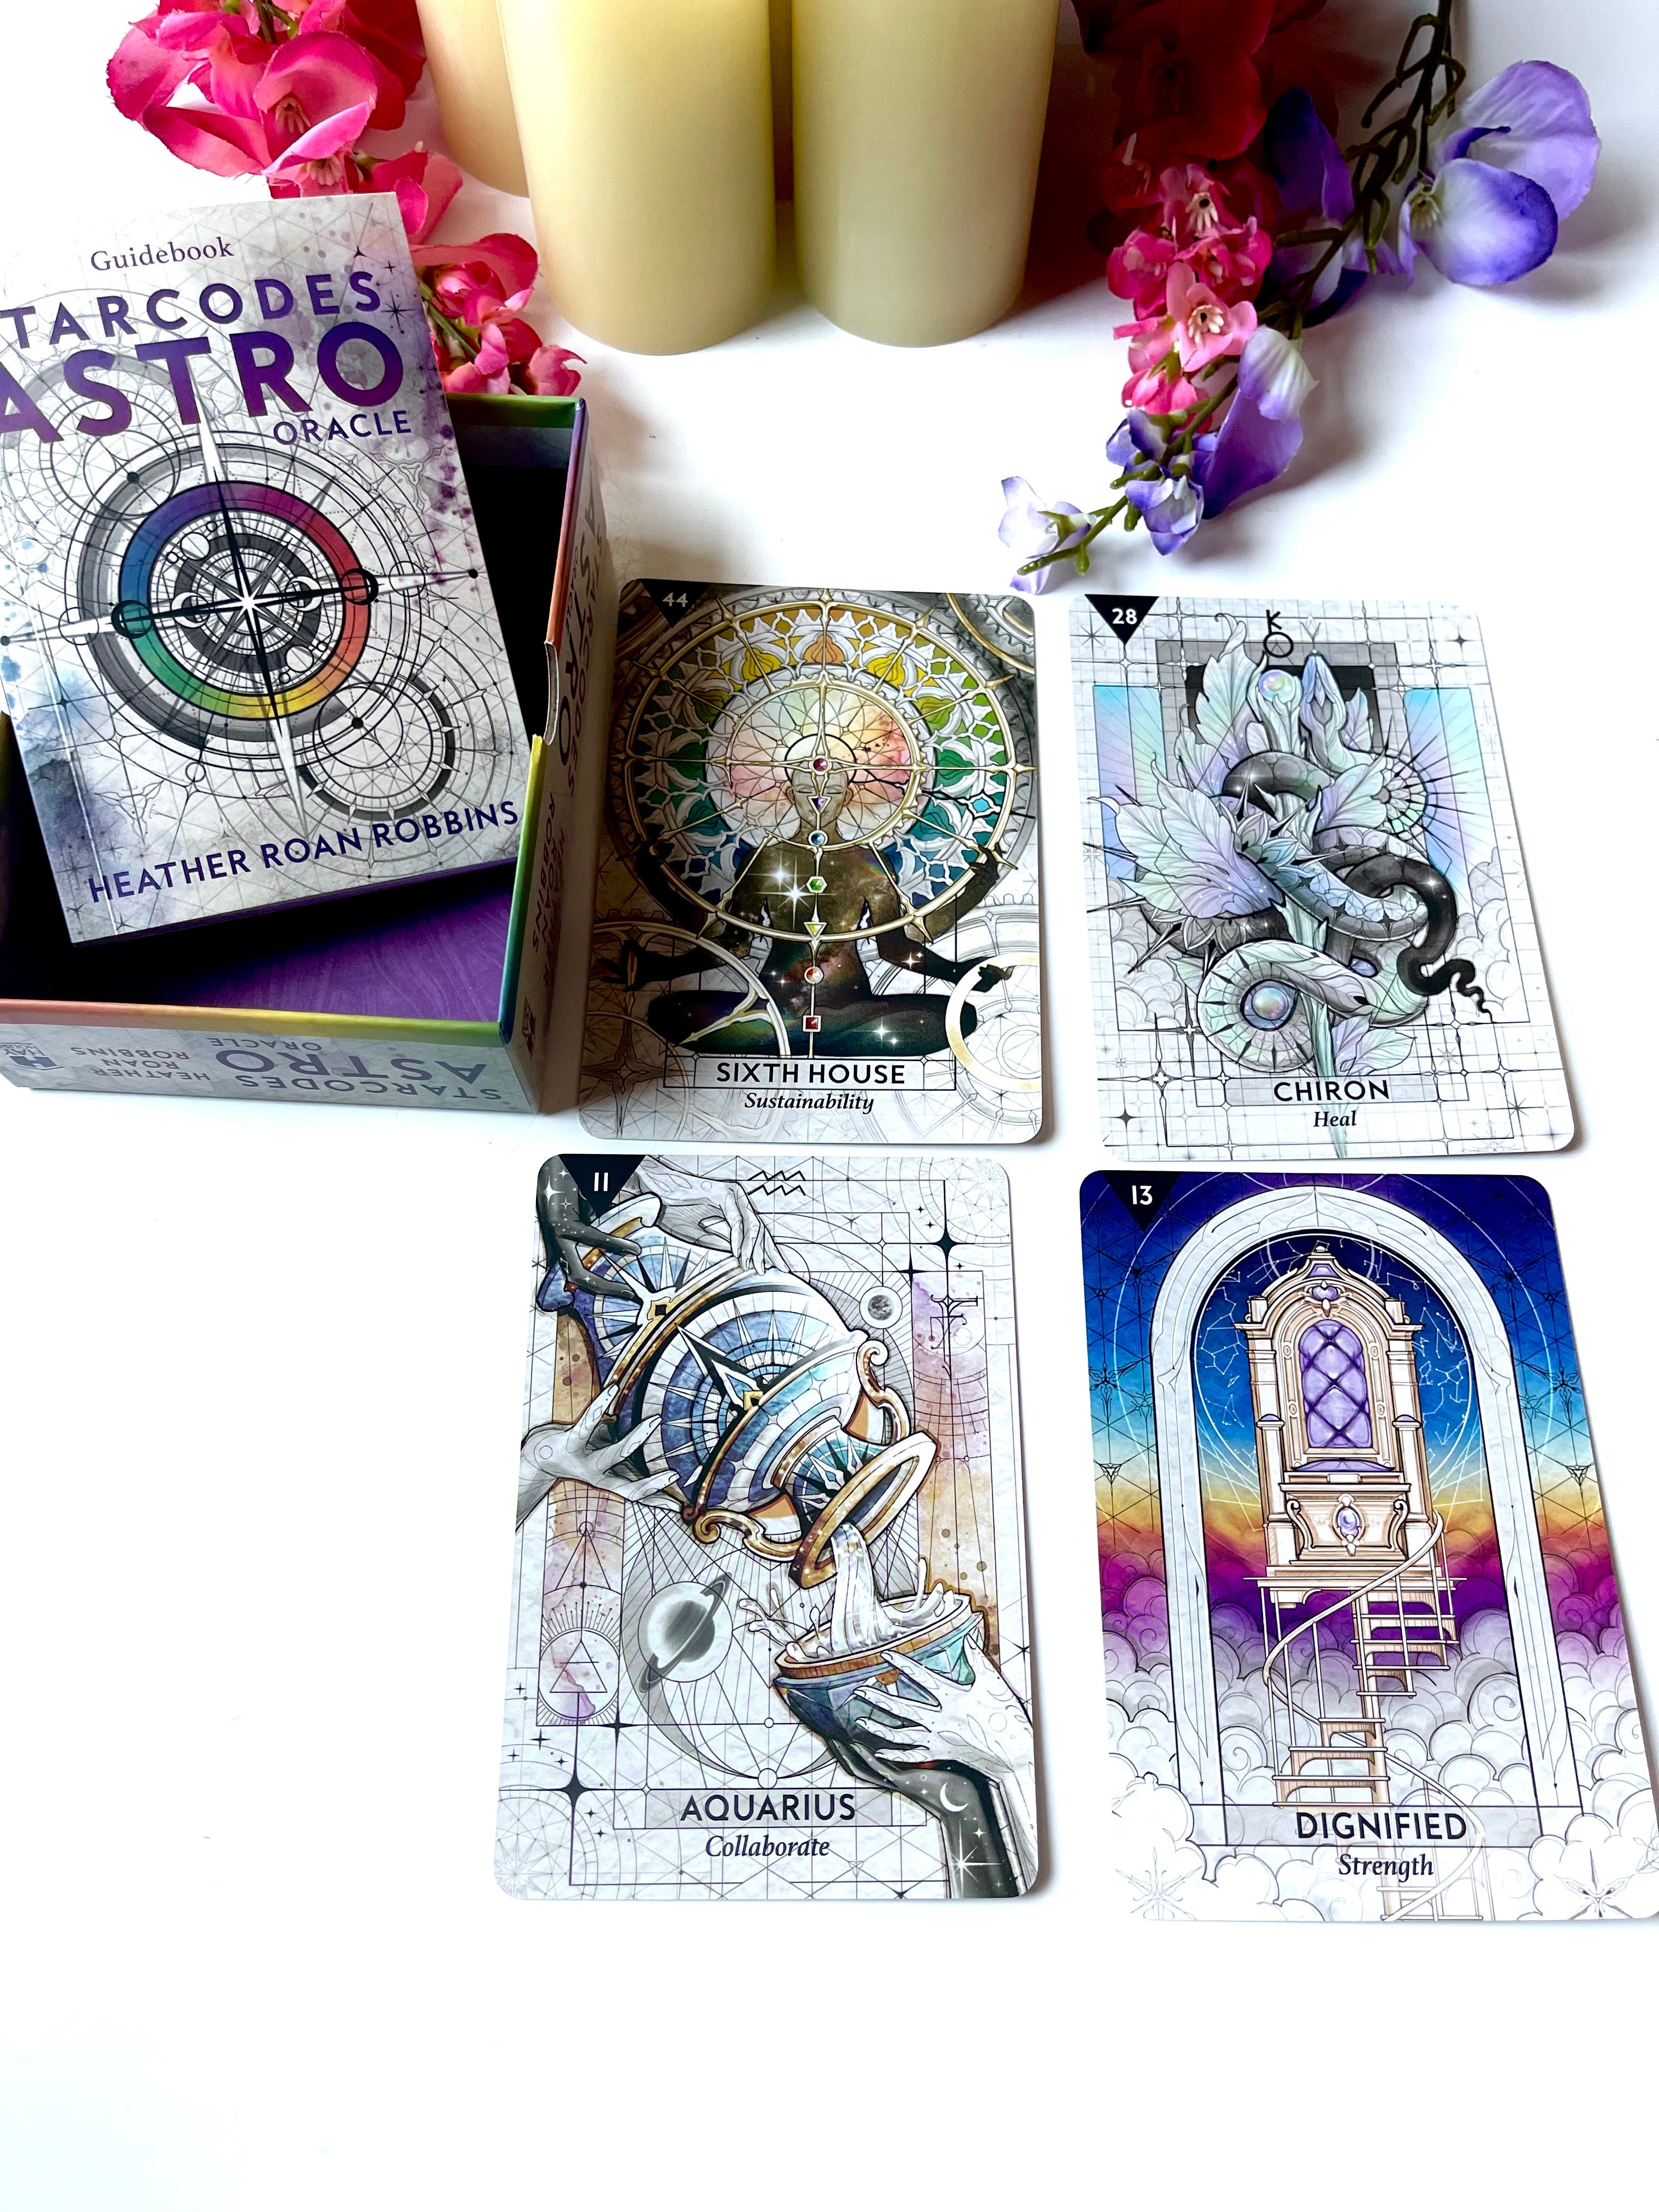 Star Codes Astro Oracle Card Deck